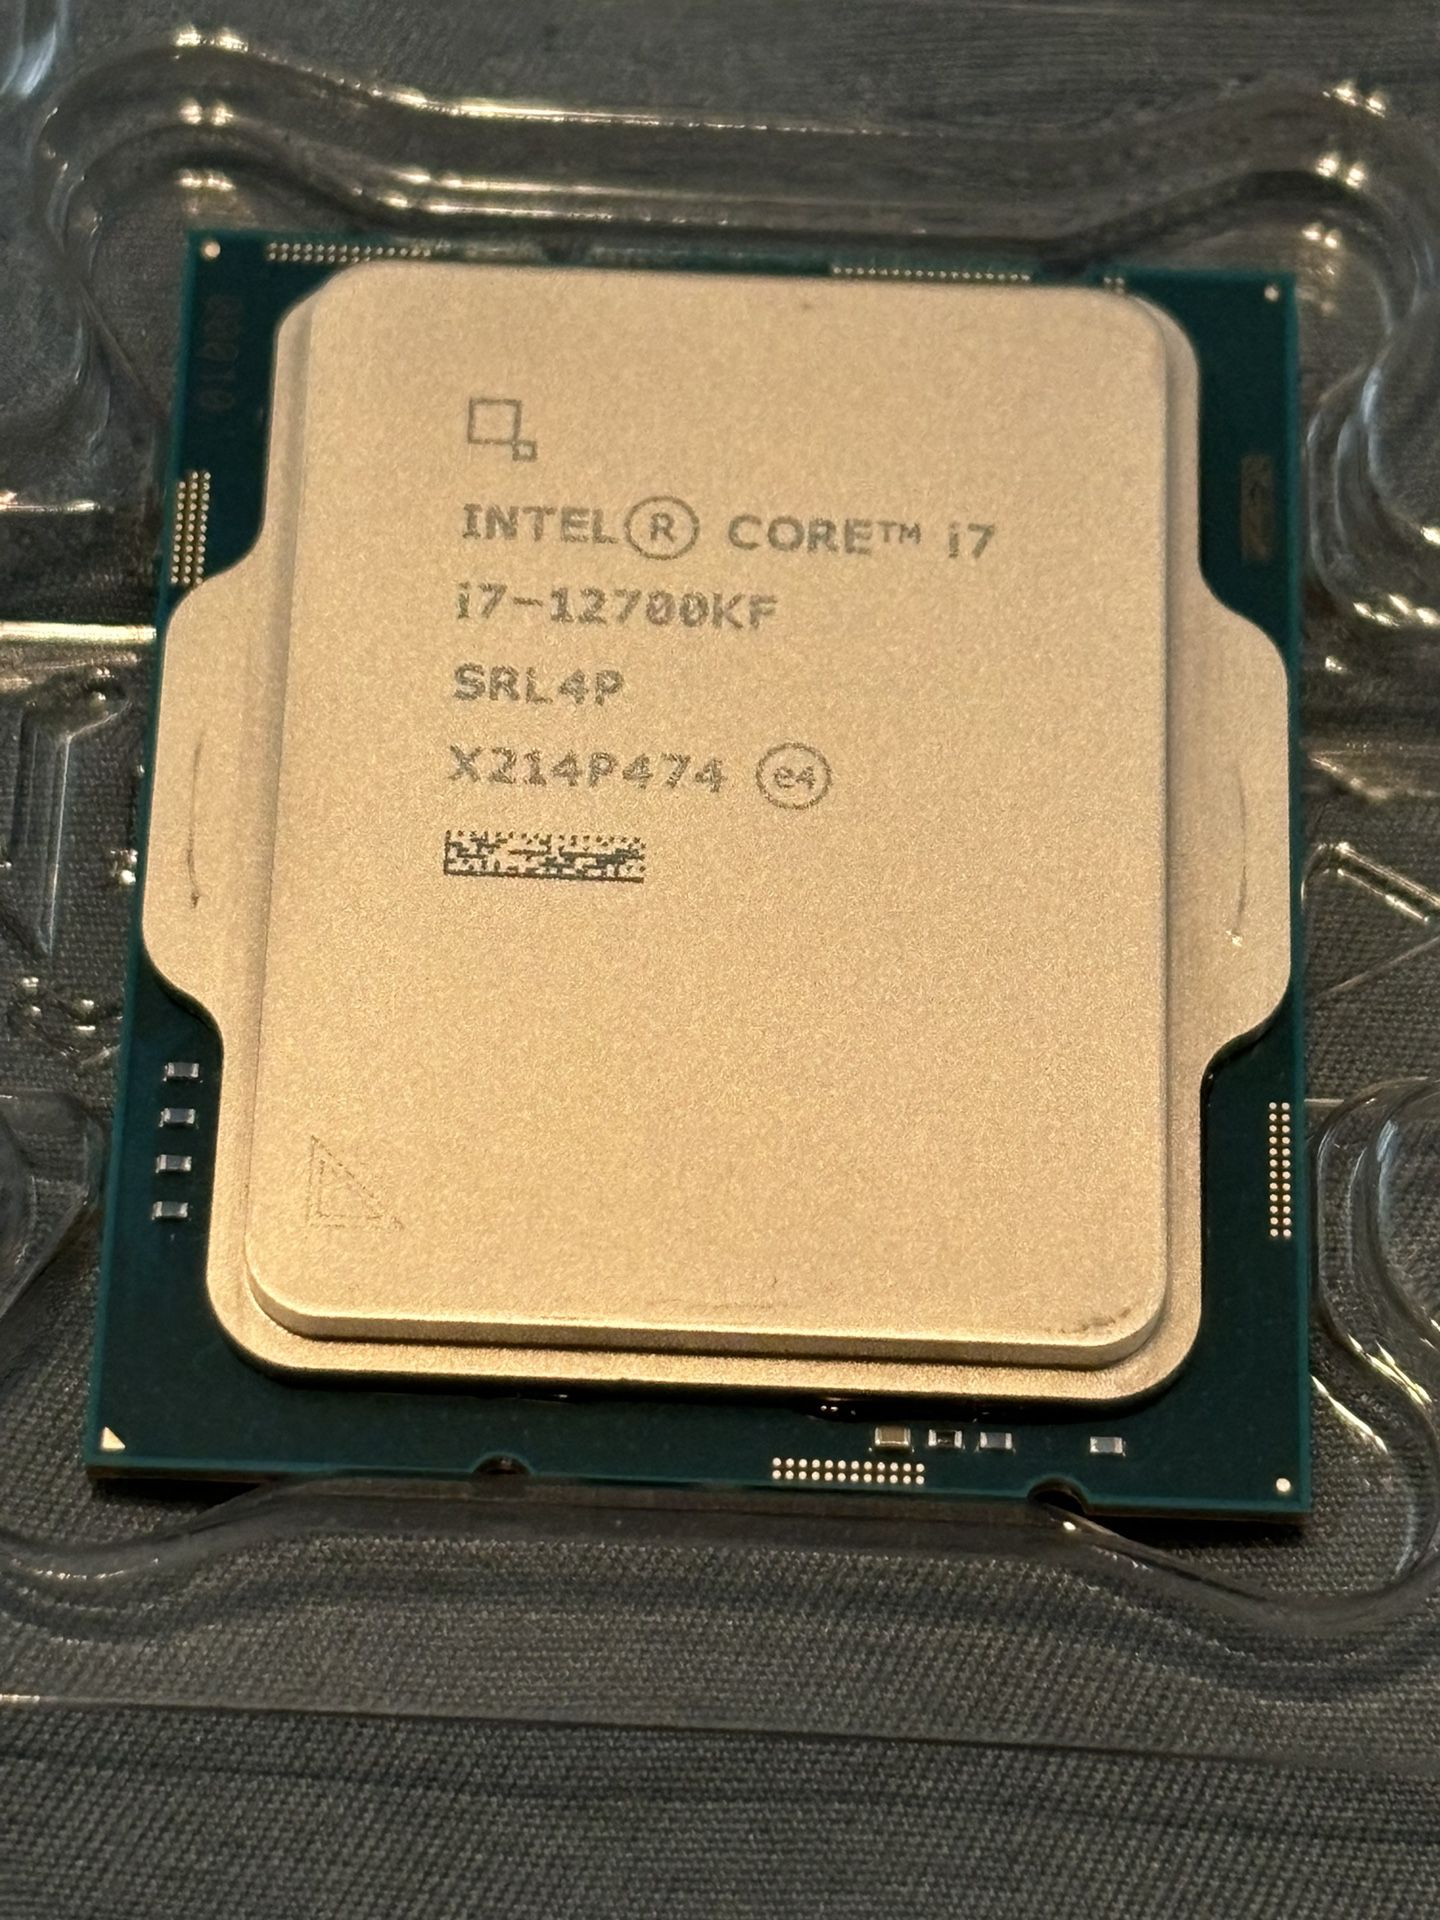 Intel Core i7 12700kf 12th Gen CPU *PRICE IS LOWEST*